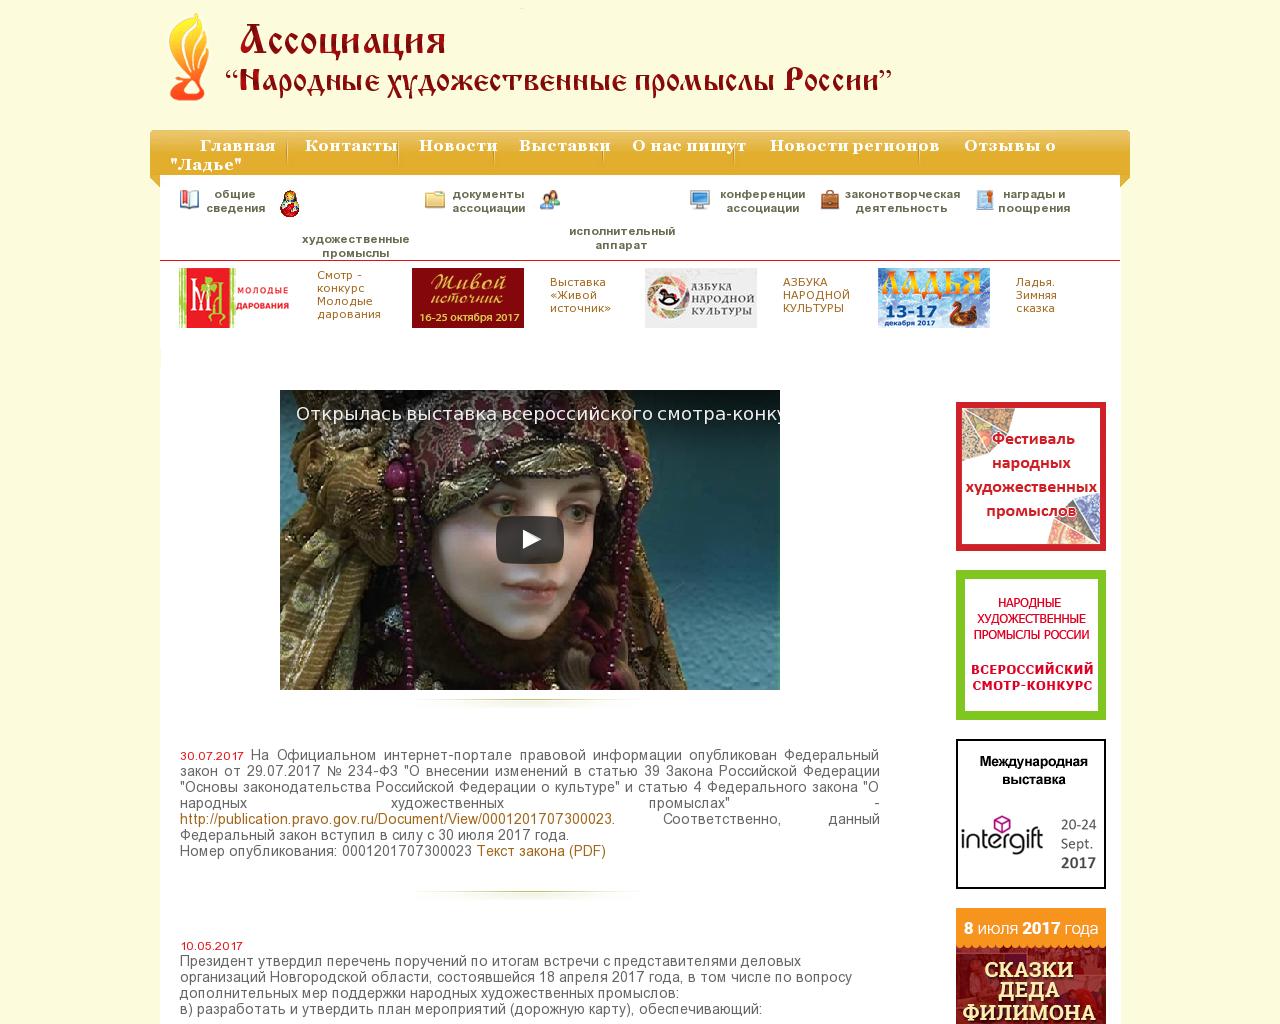 Изображение сайта nkhp.ru в разрешении 1280x1024